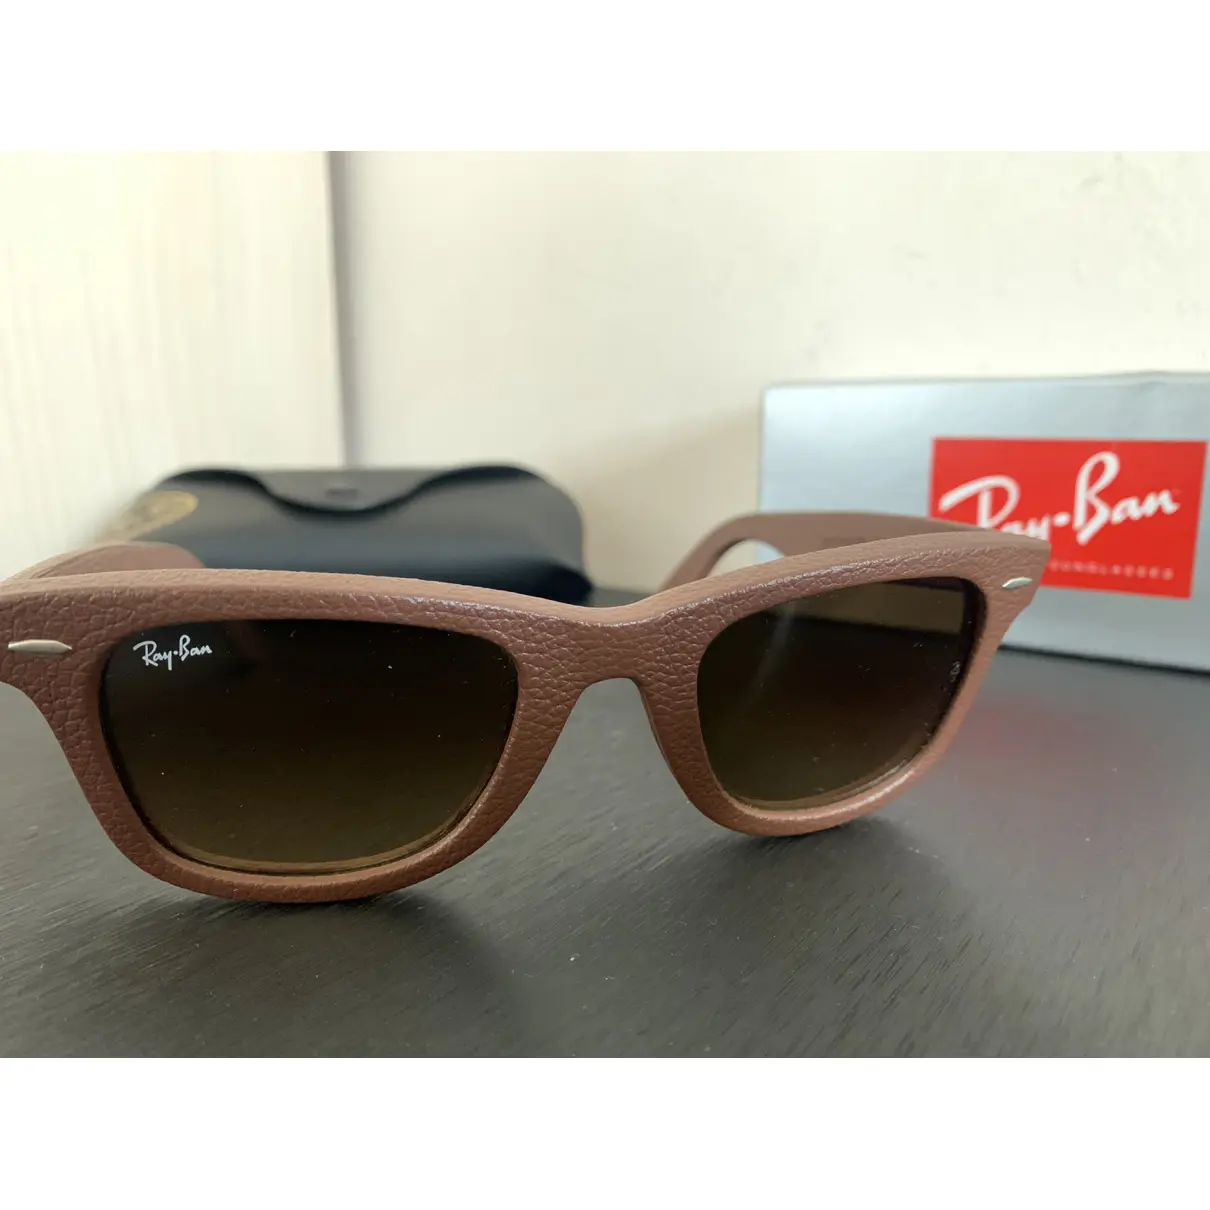 Original Wayfarer leather sunglasses Ray-Ban